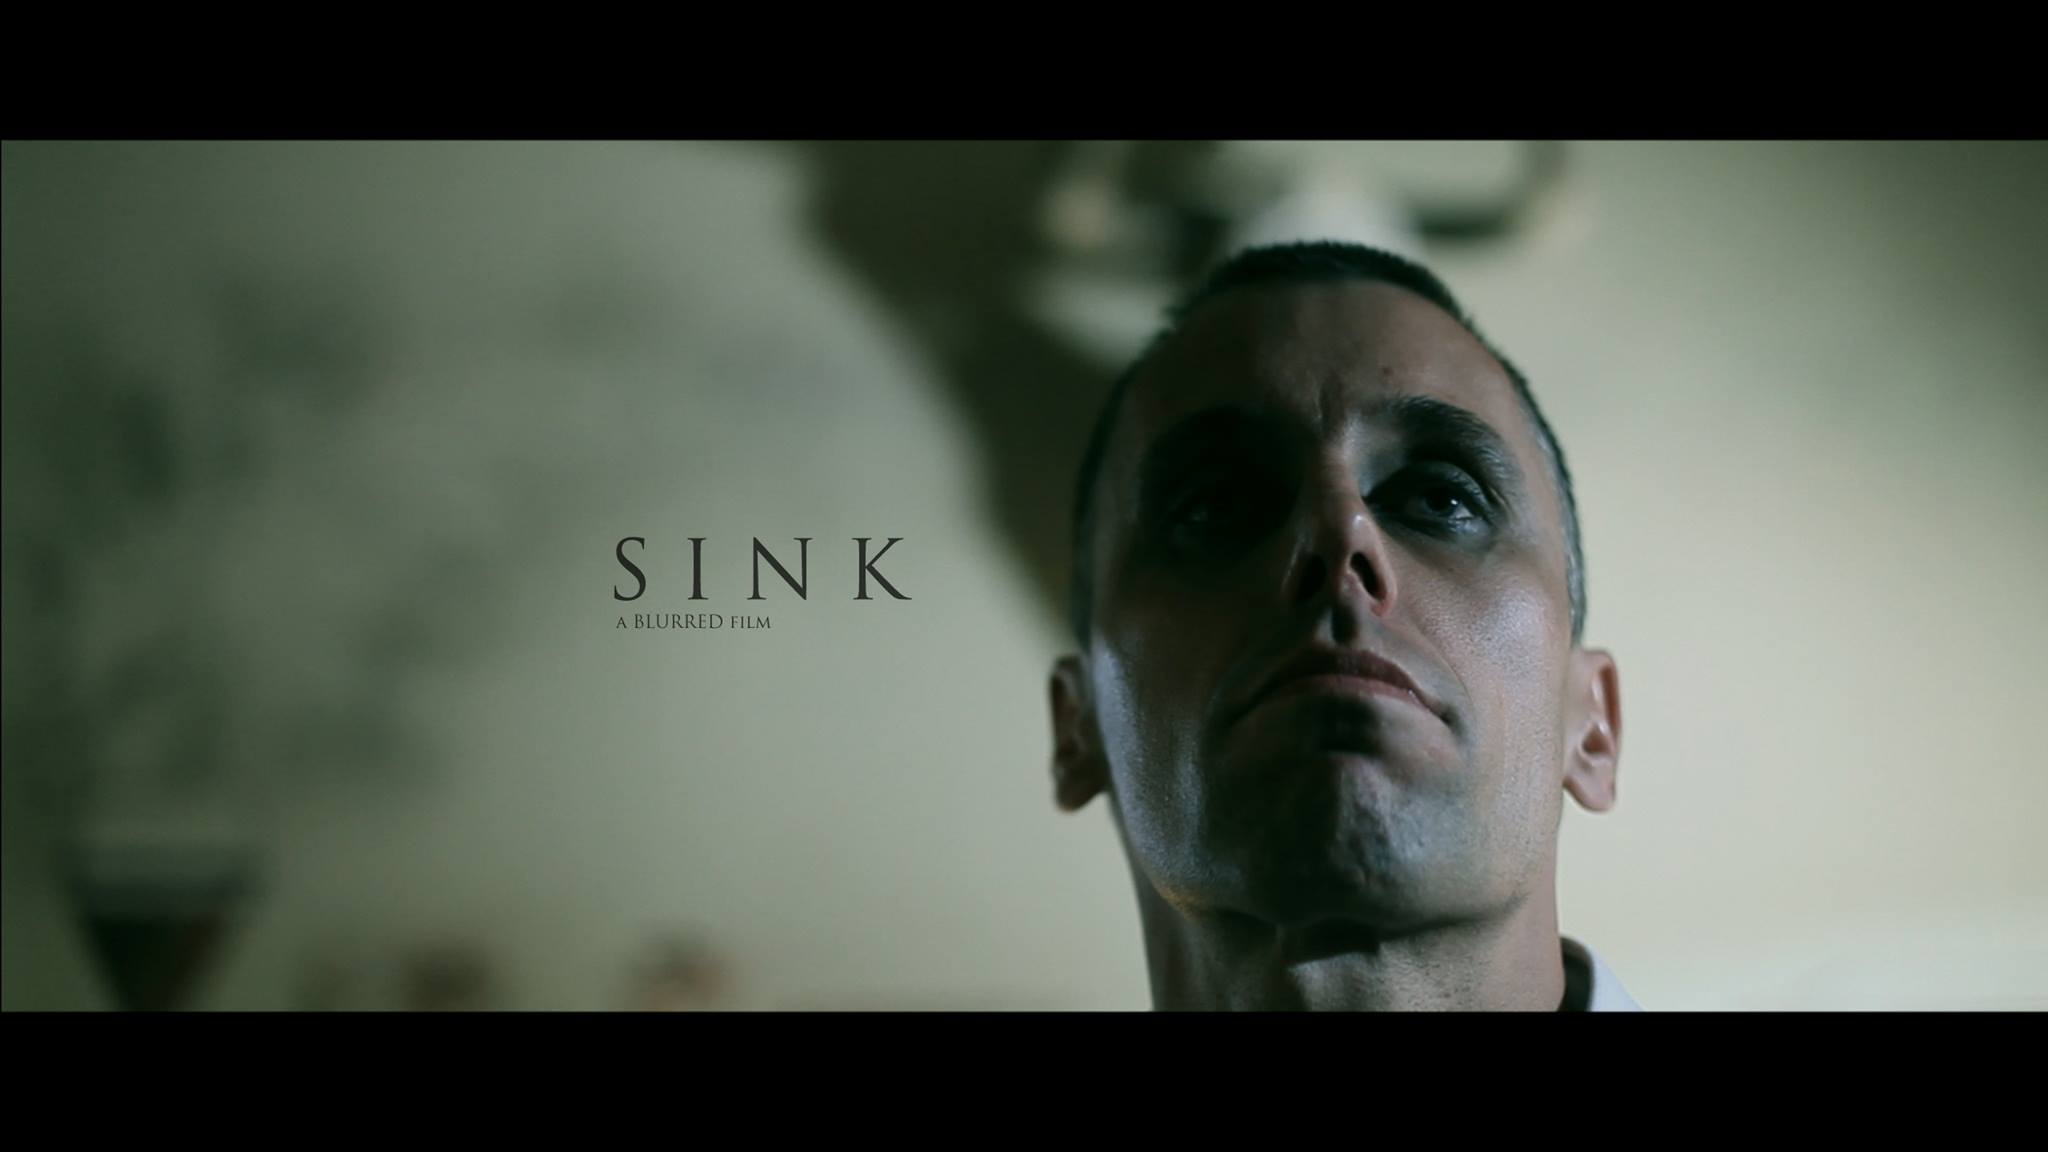 Cover Art For The Suspense Thriller 'Sink'